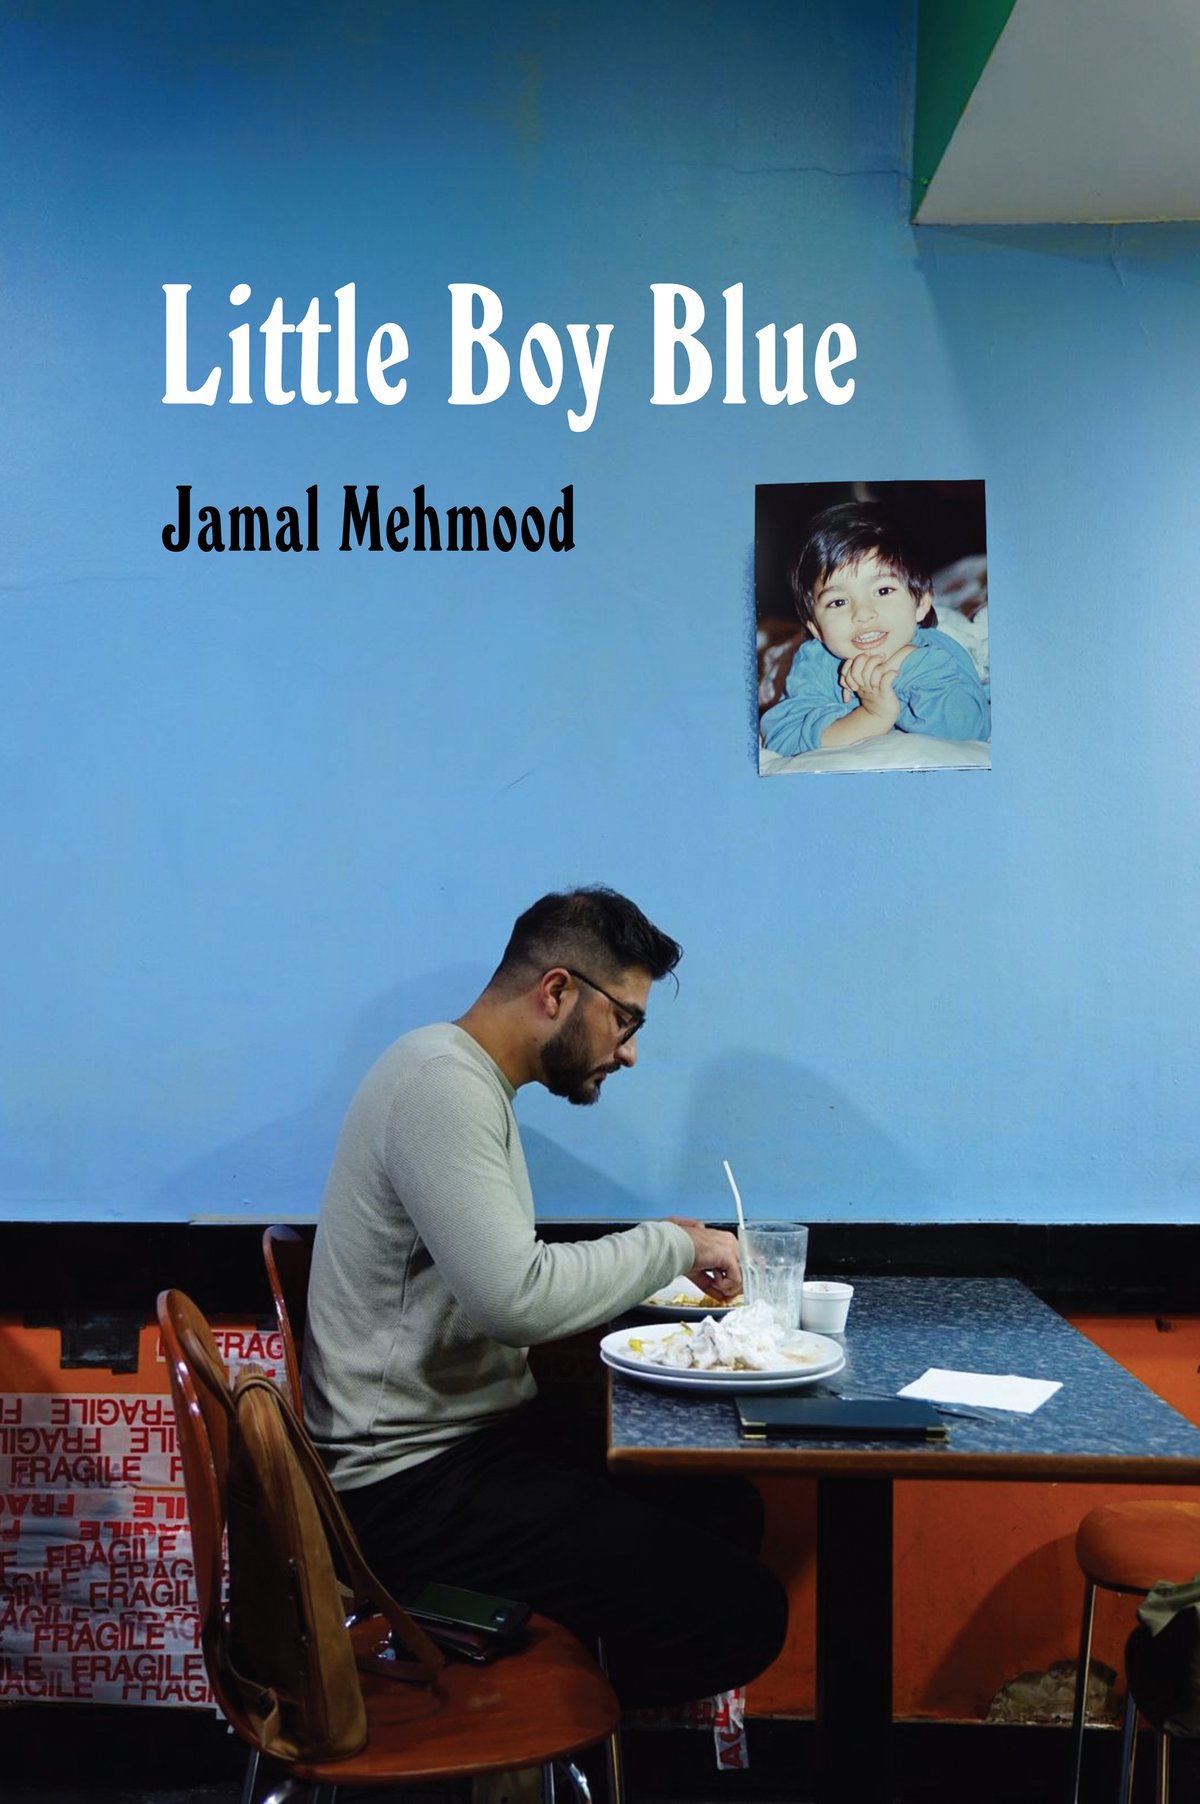 Image of Little Boy Blue by Jamal Mehmood